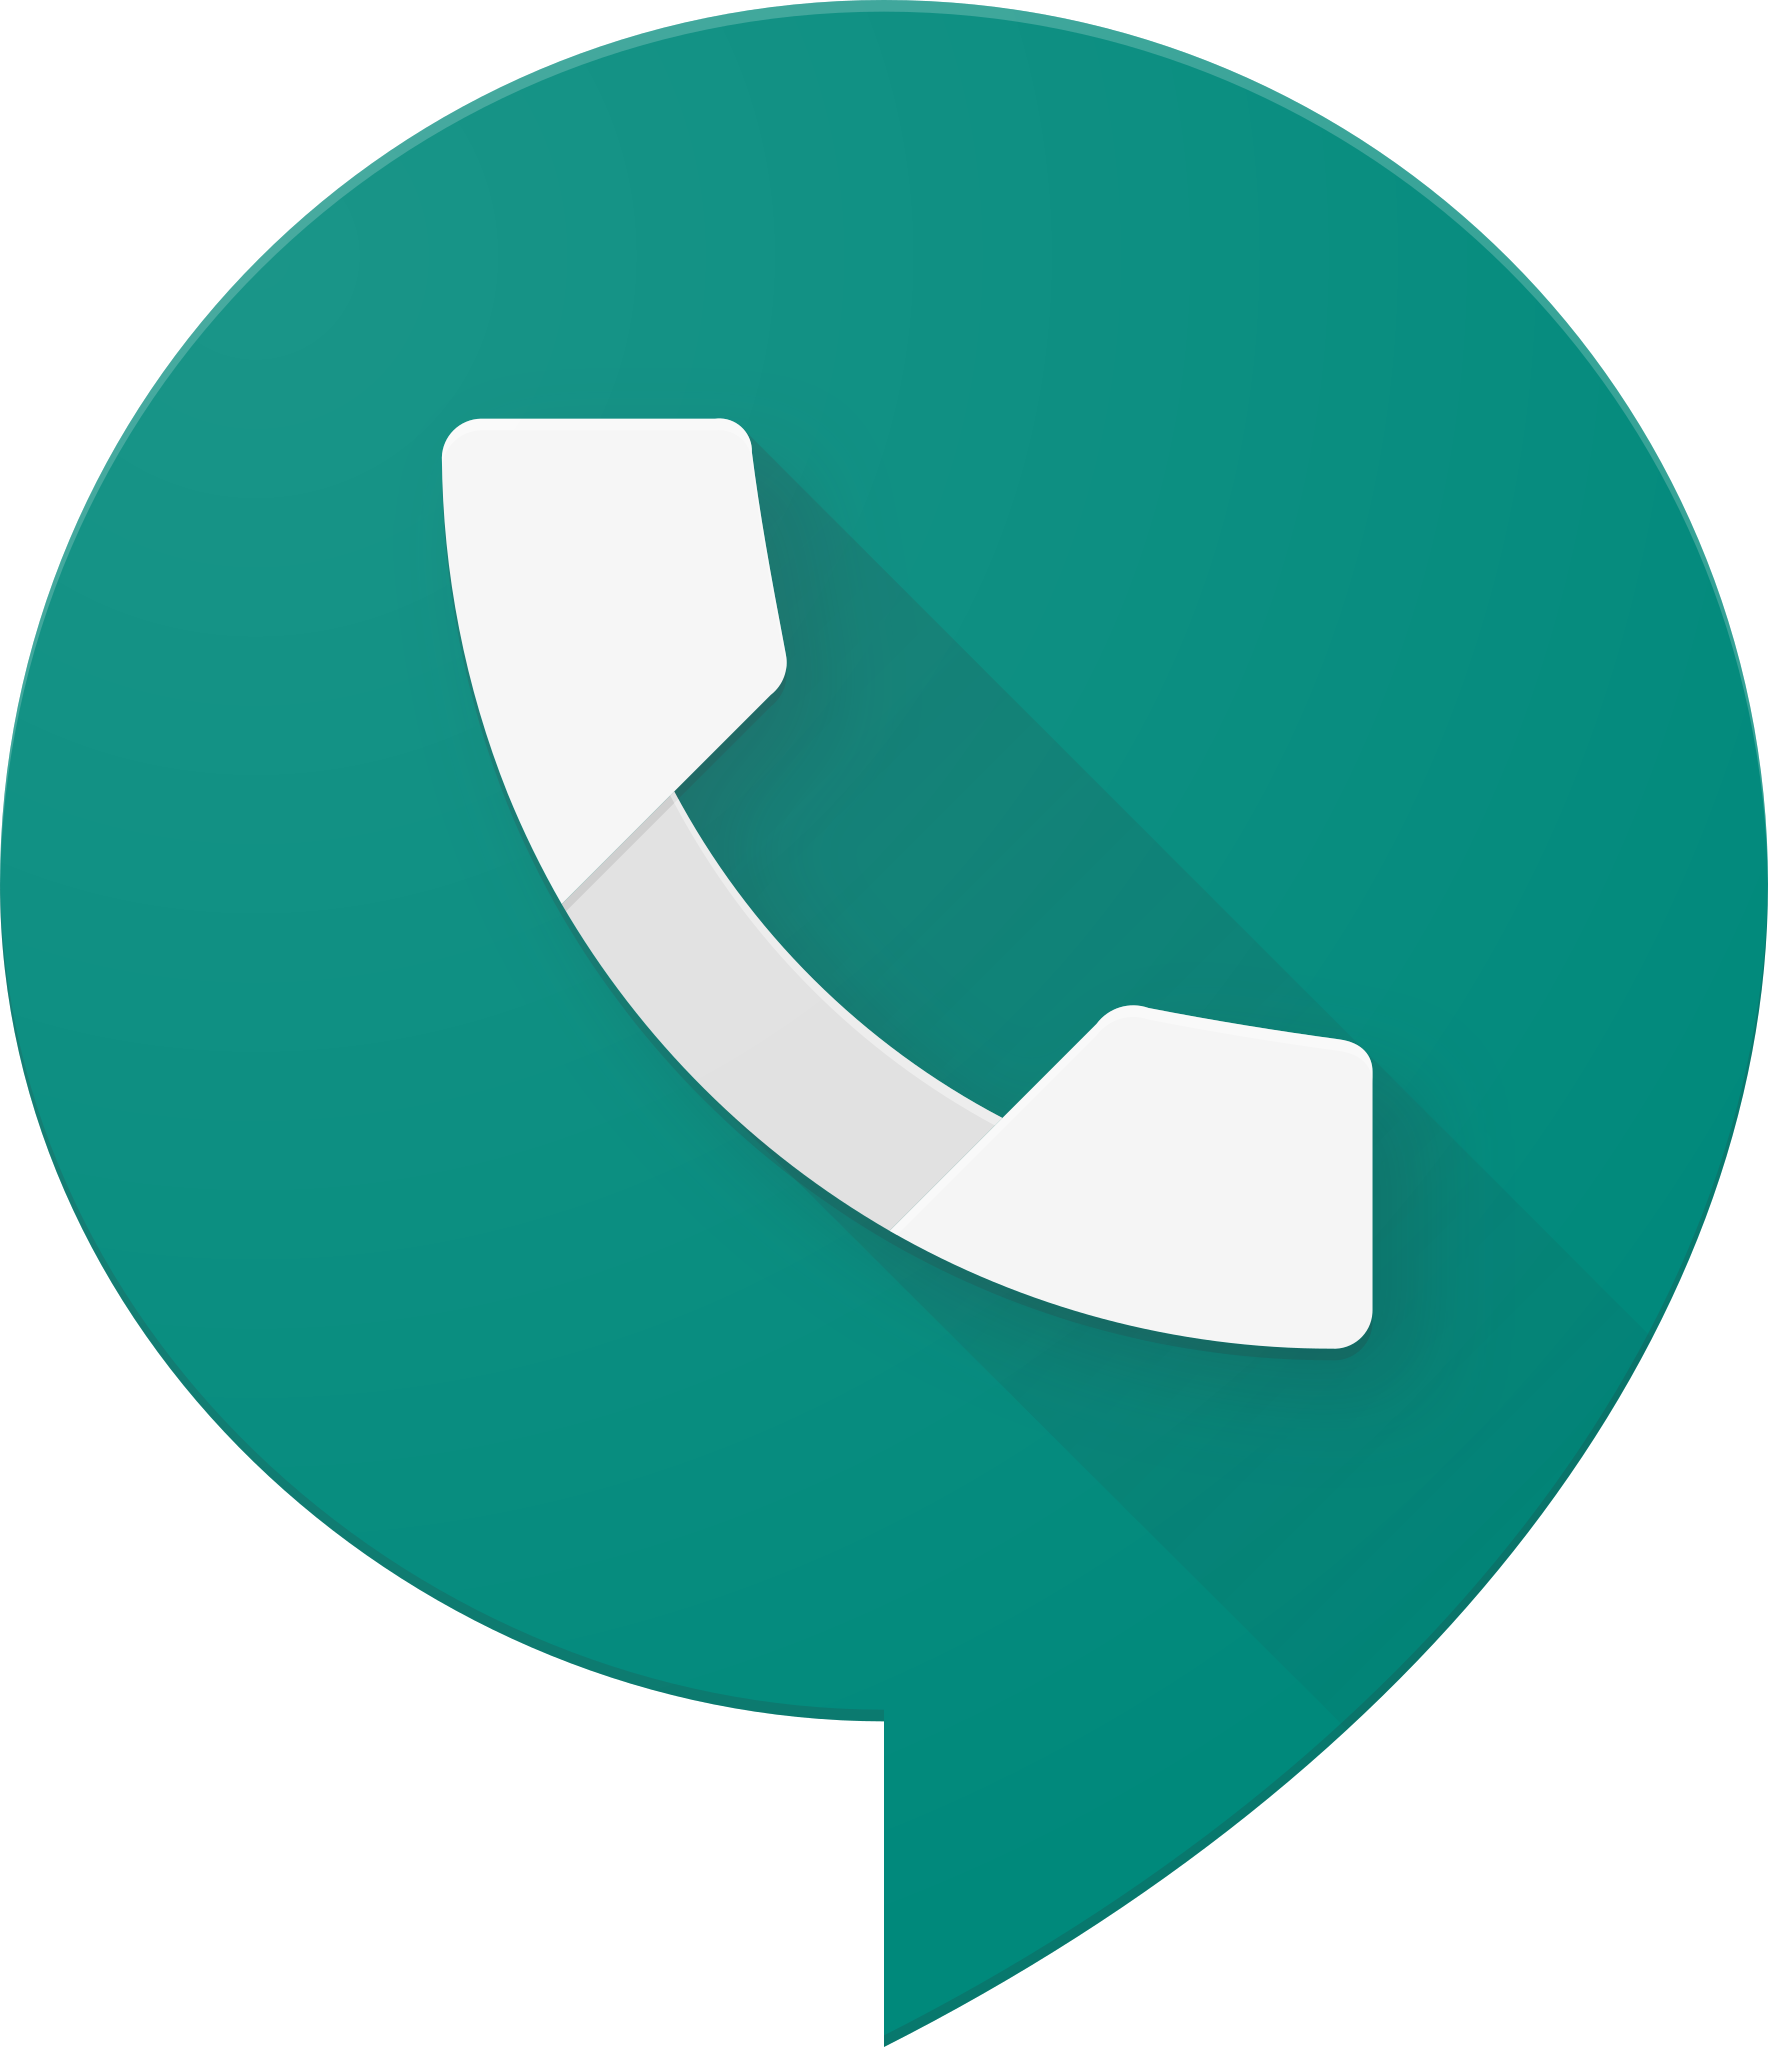 GV 可接收whatsapp和Telegram 各类APP验证短信,无法主动发送消息